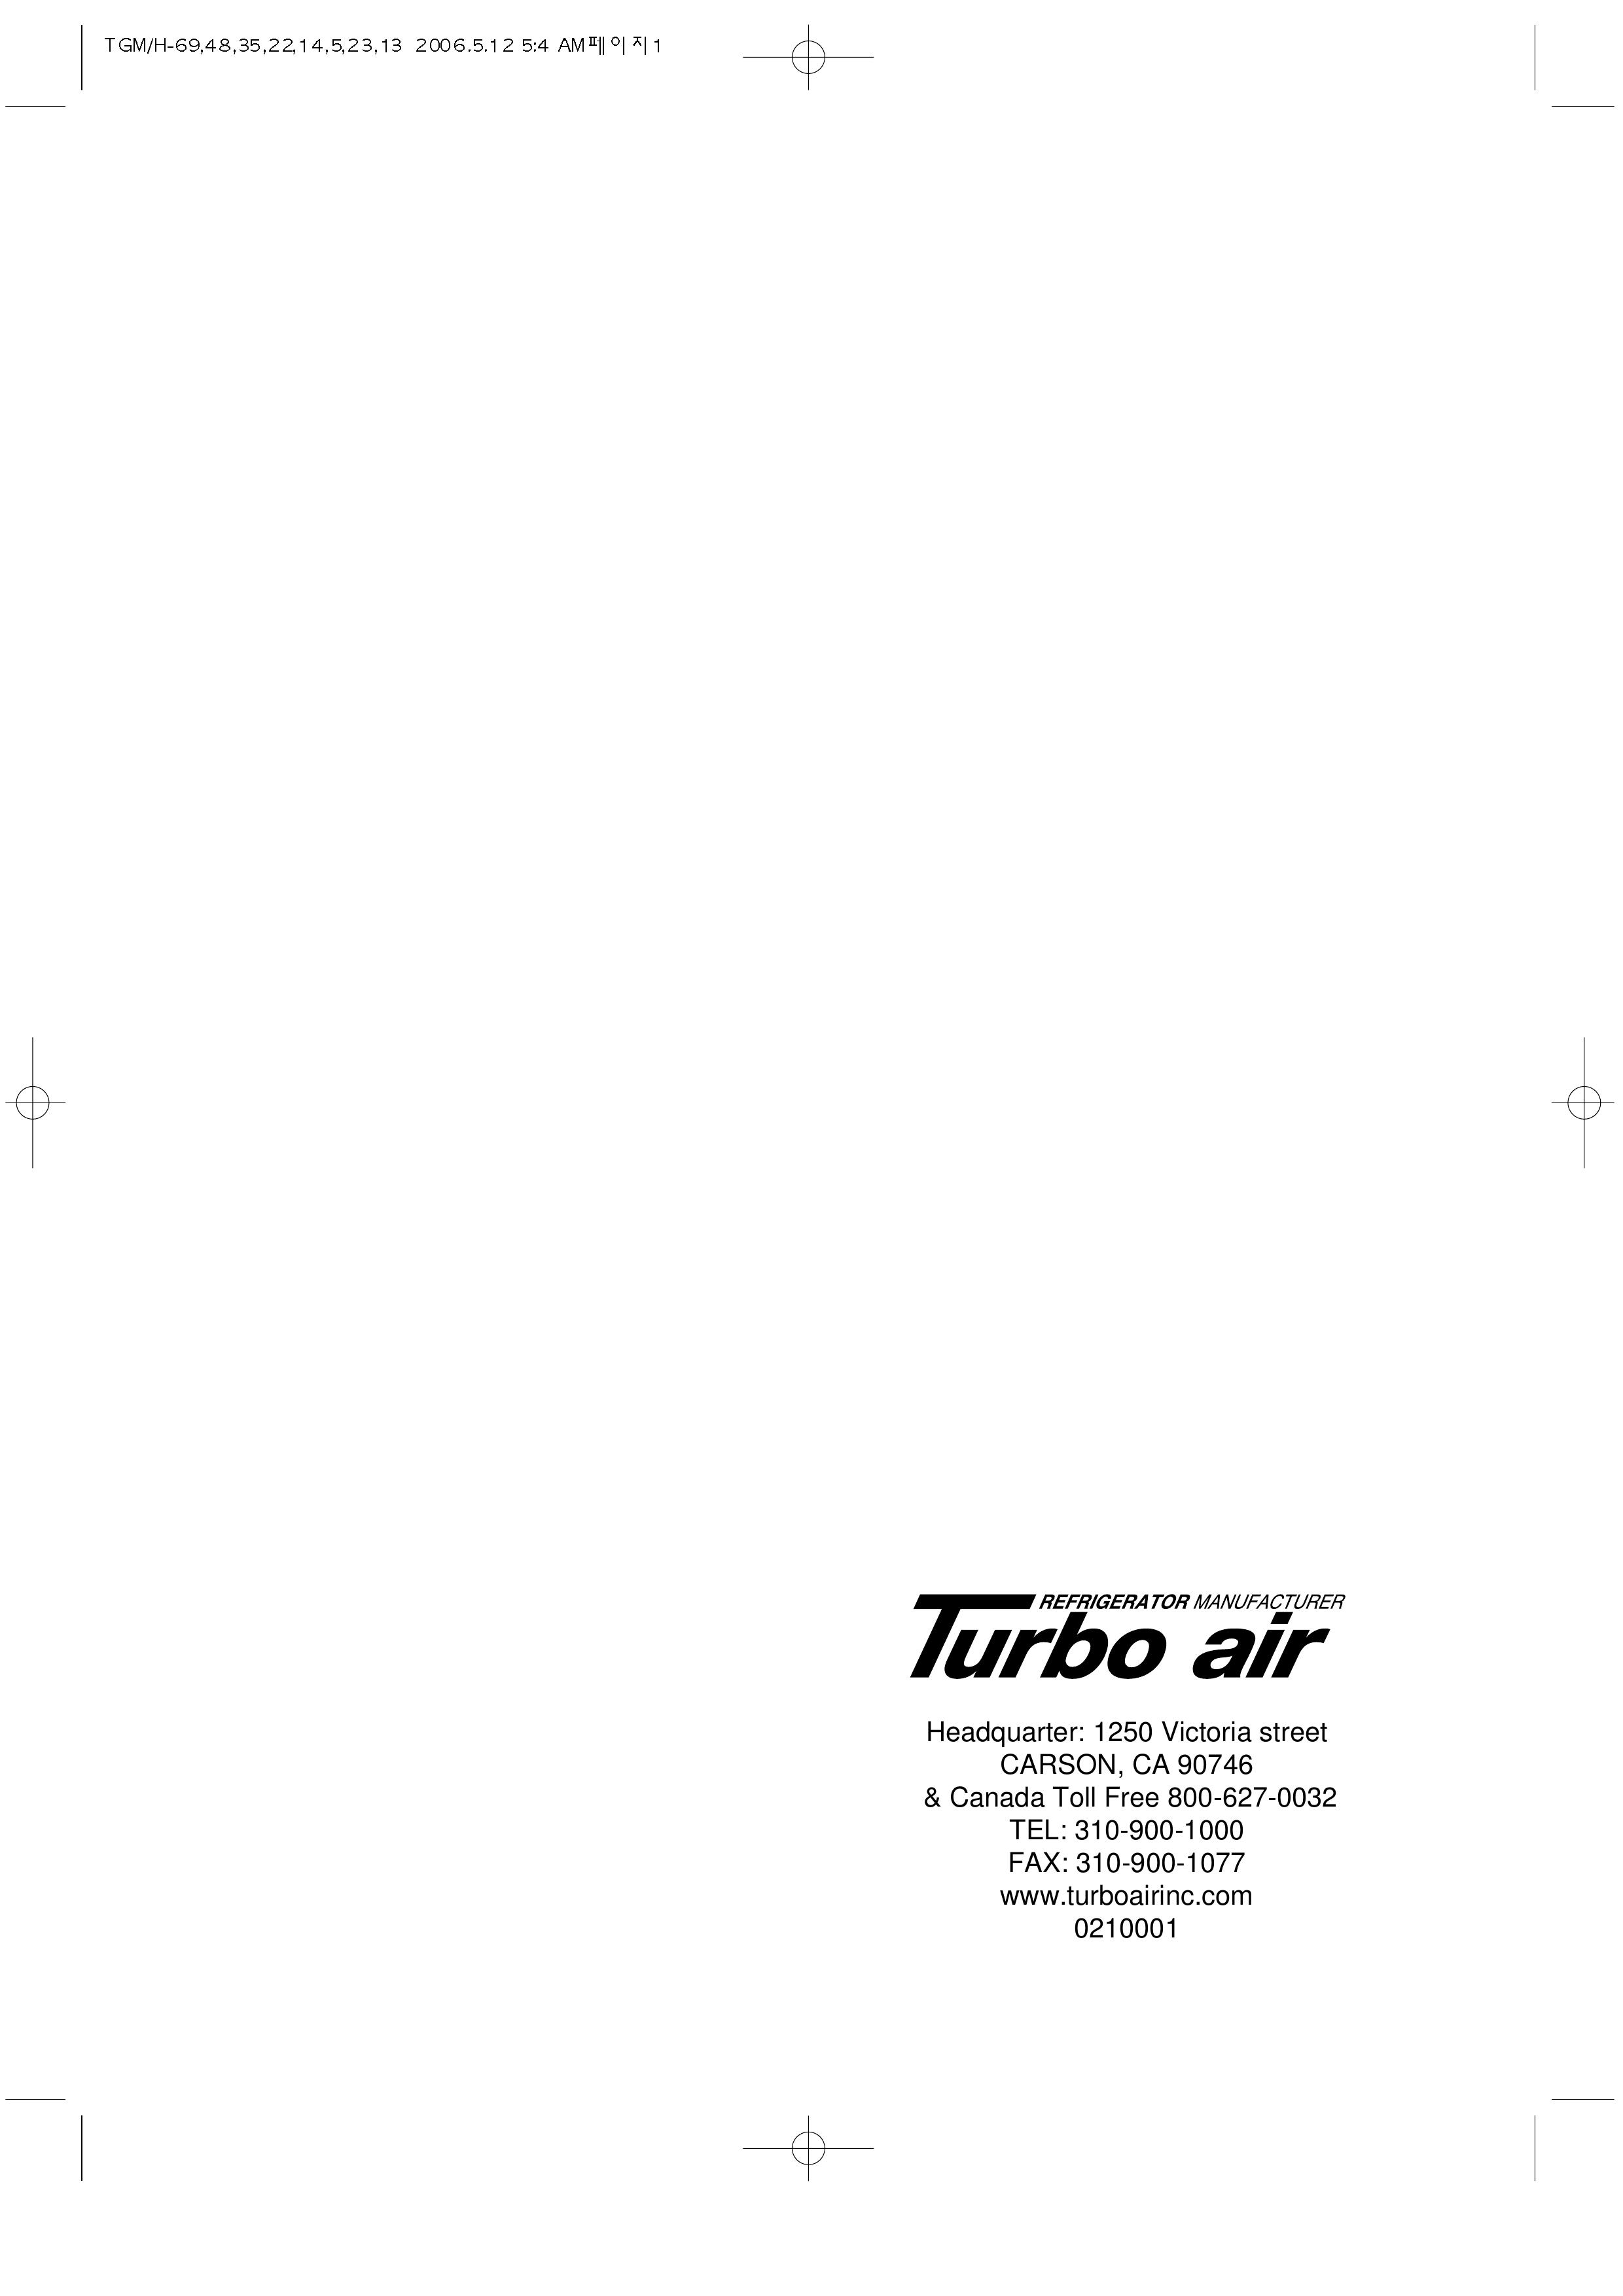 Turbo Air TGM-14RV Refrigerator User Manual